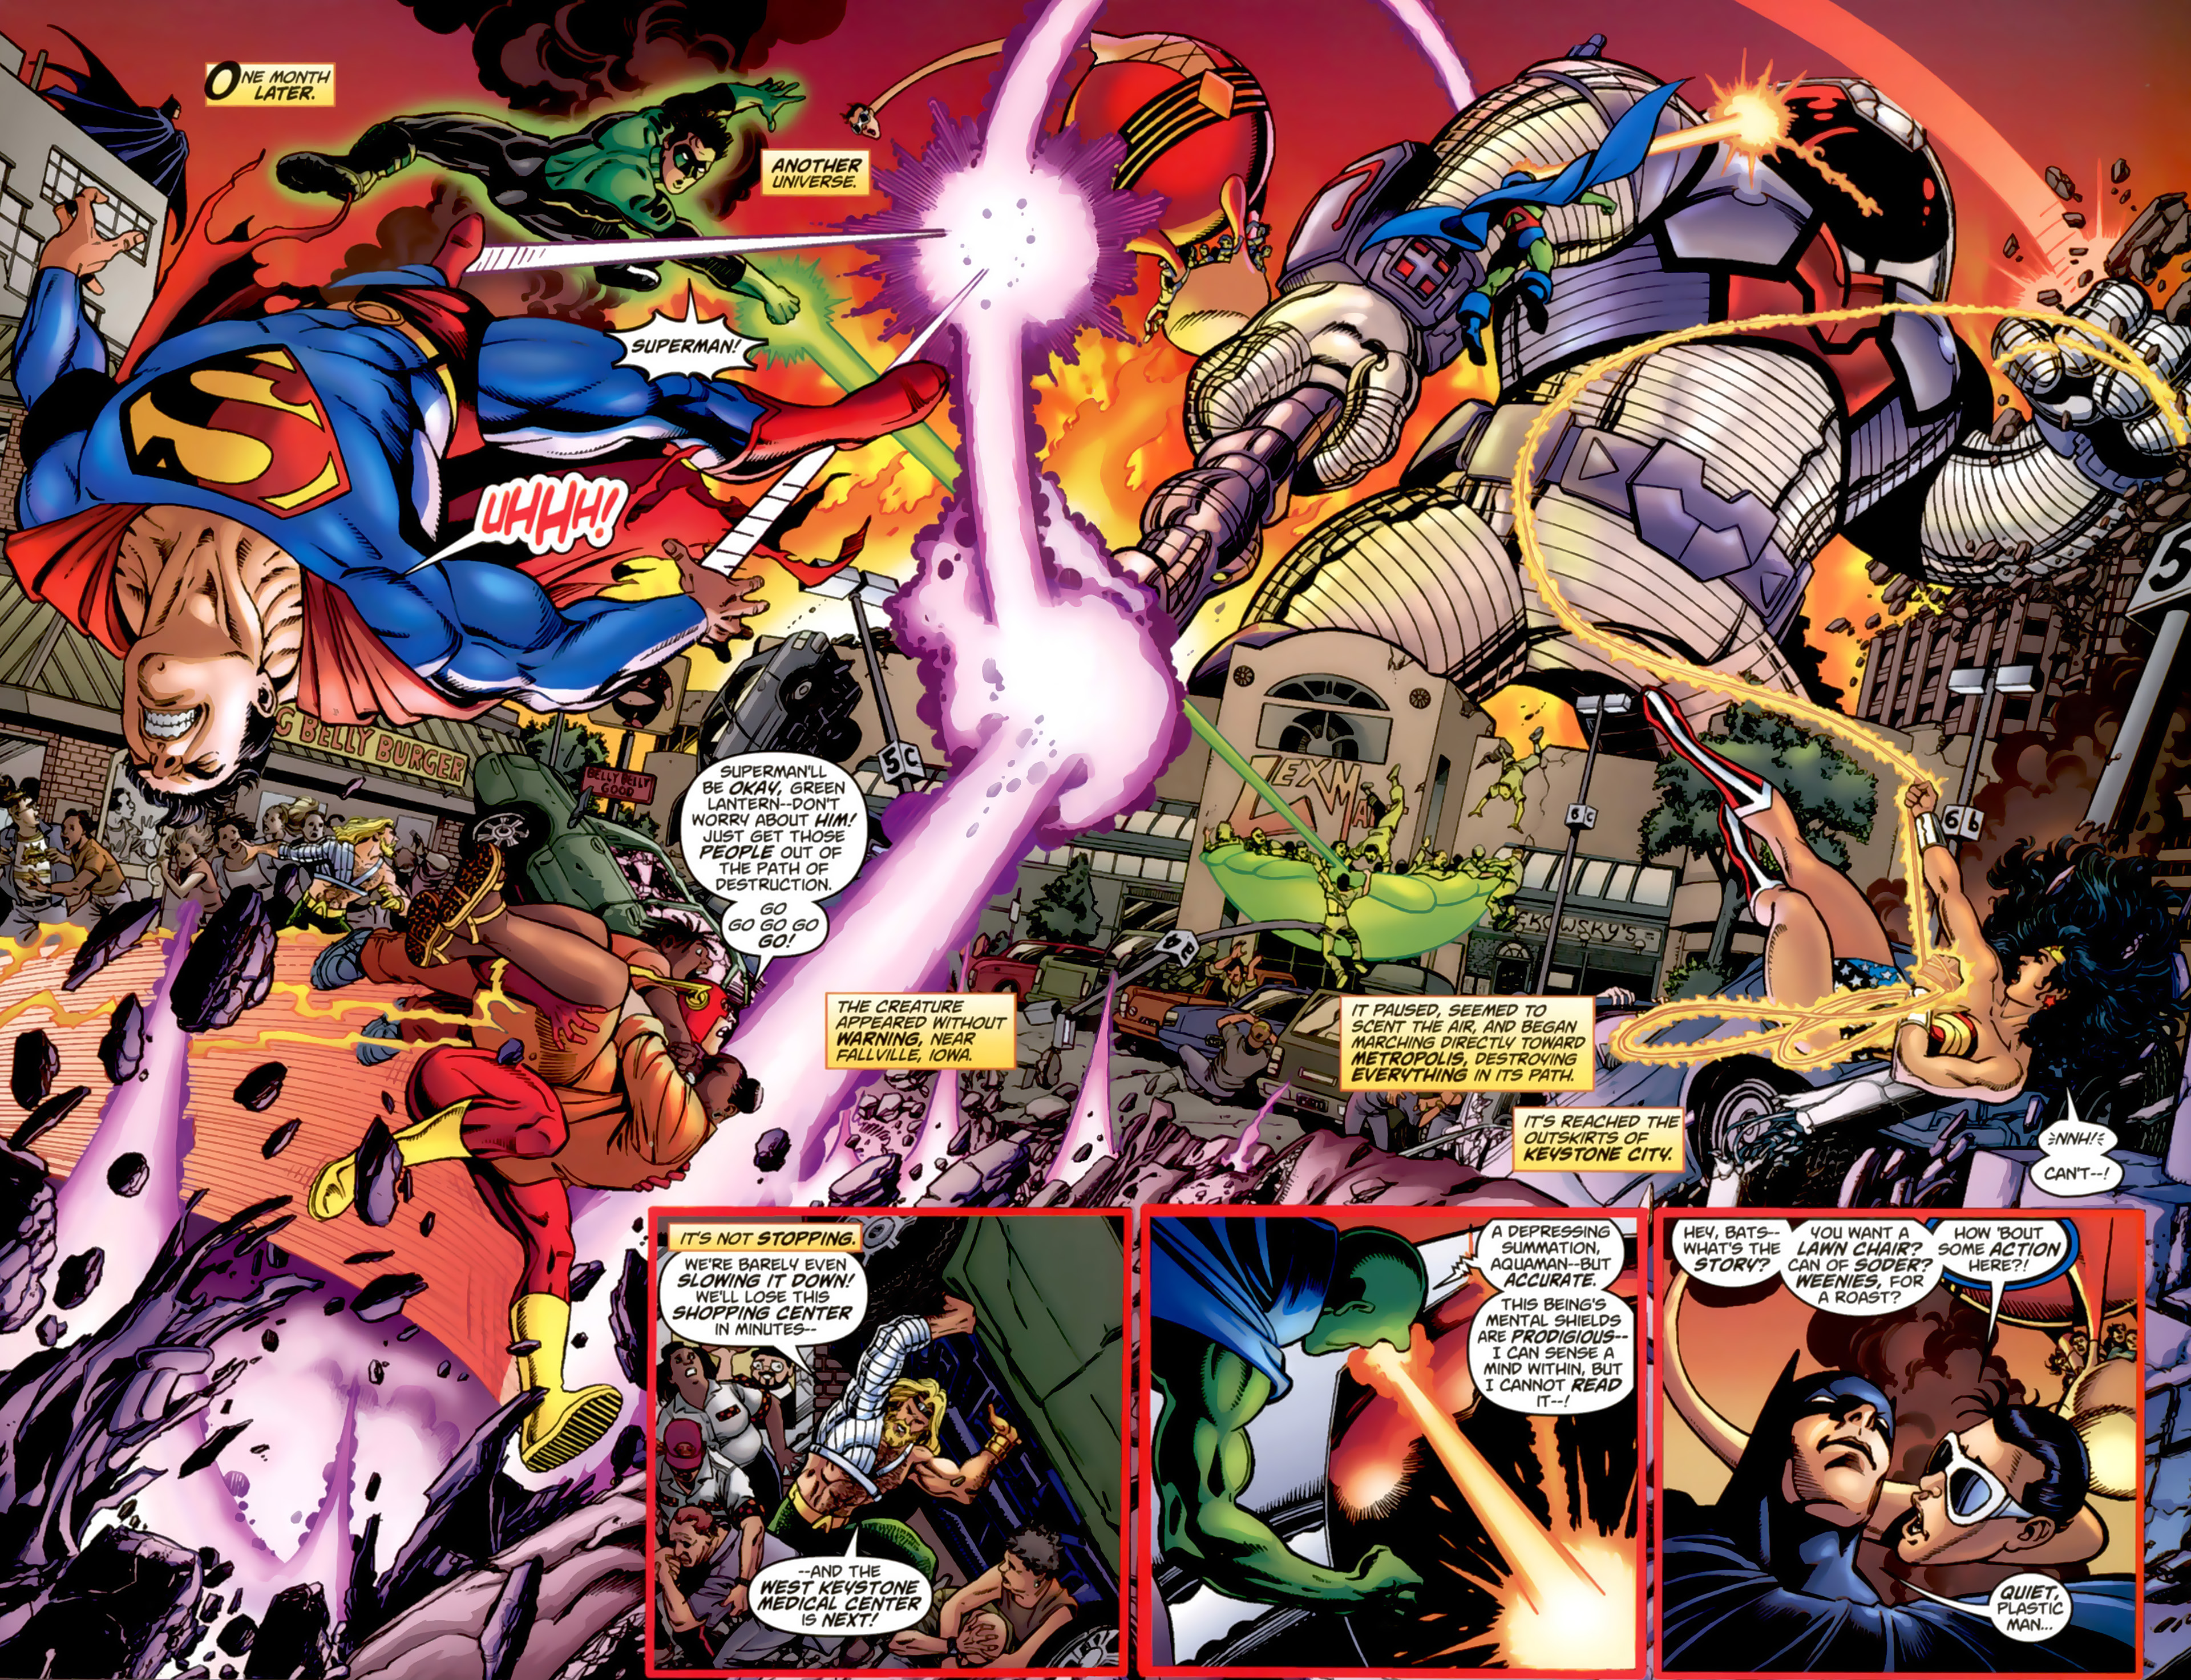 Read online JLA/Avengers comic - Issue #1 - 10.